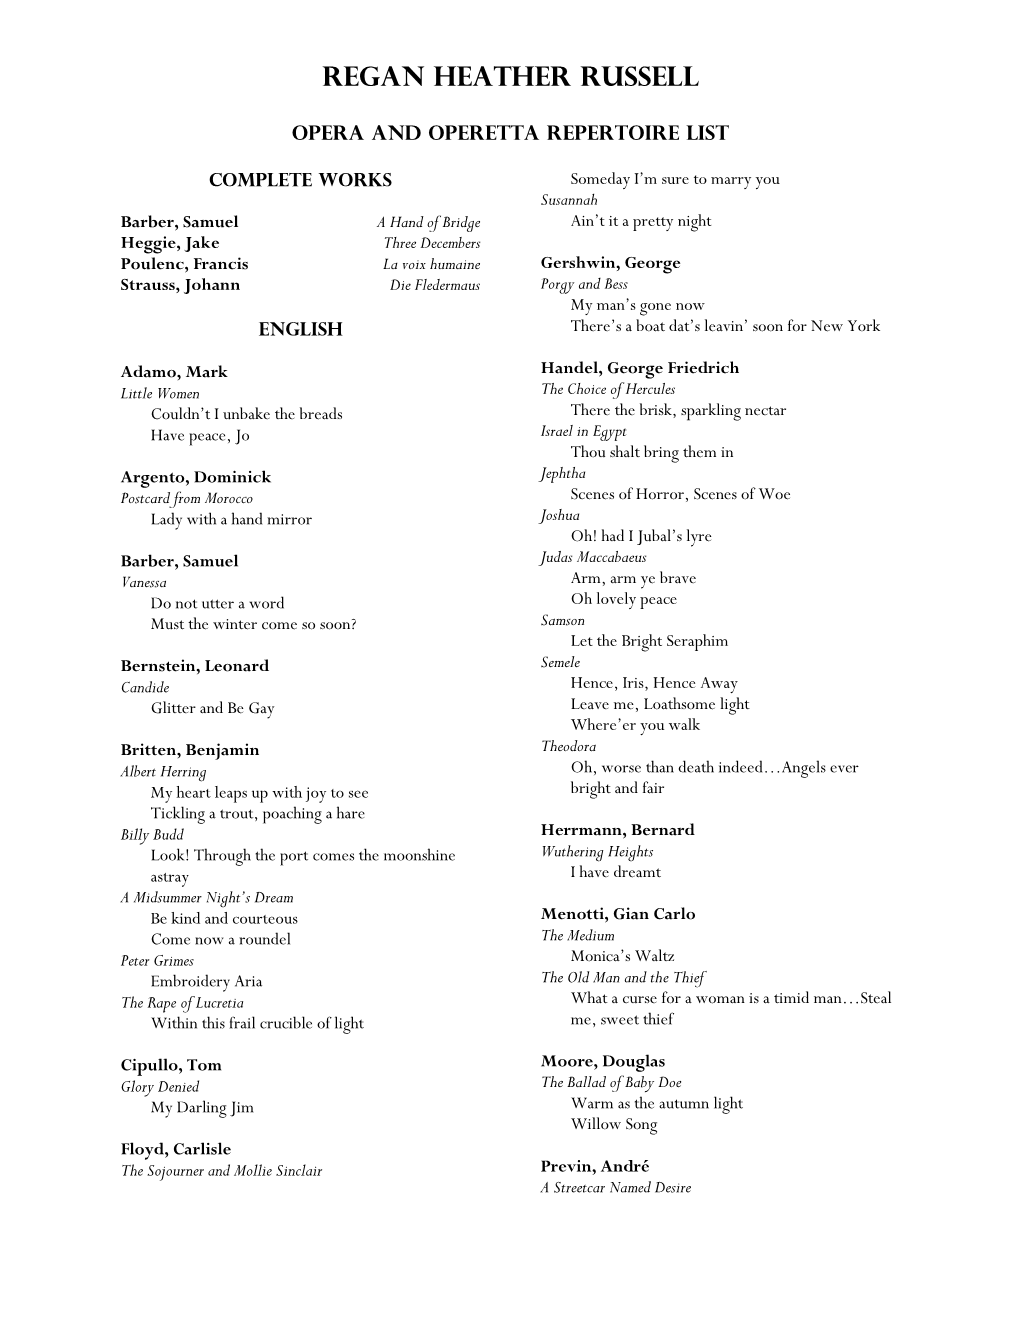 Opera and Operetta Repertoire List